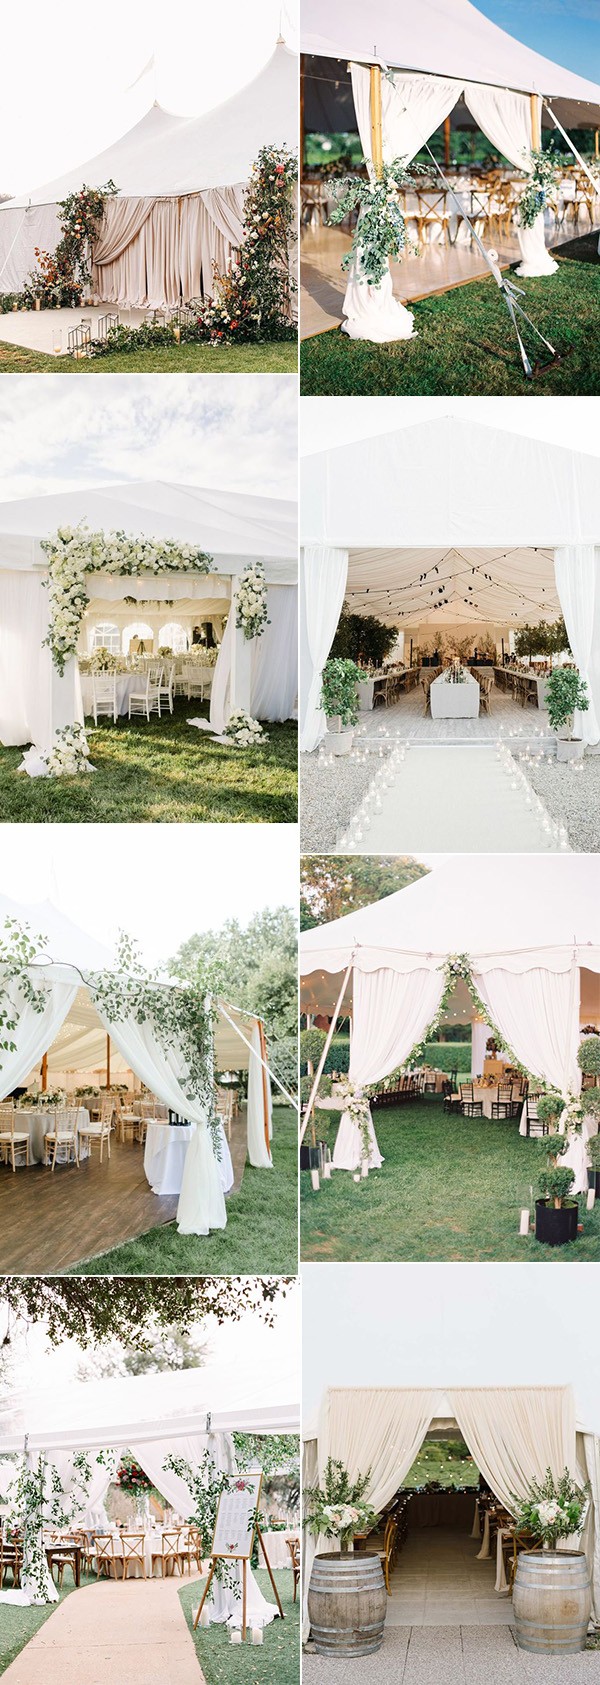 outdoor tented wedding entrance decoration ideas